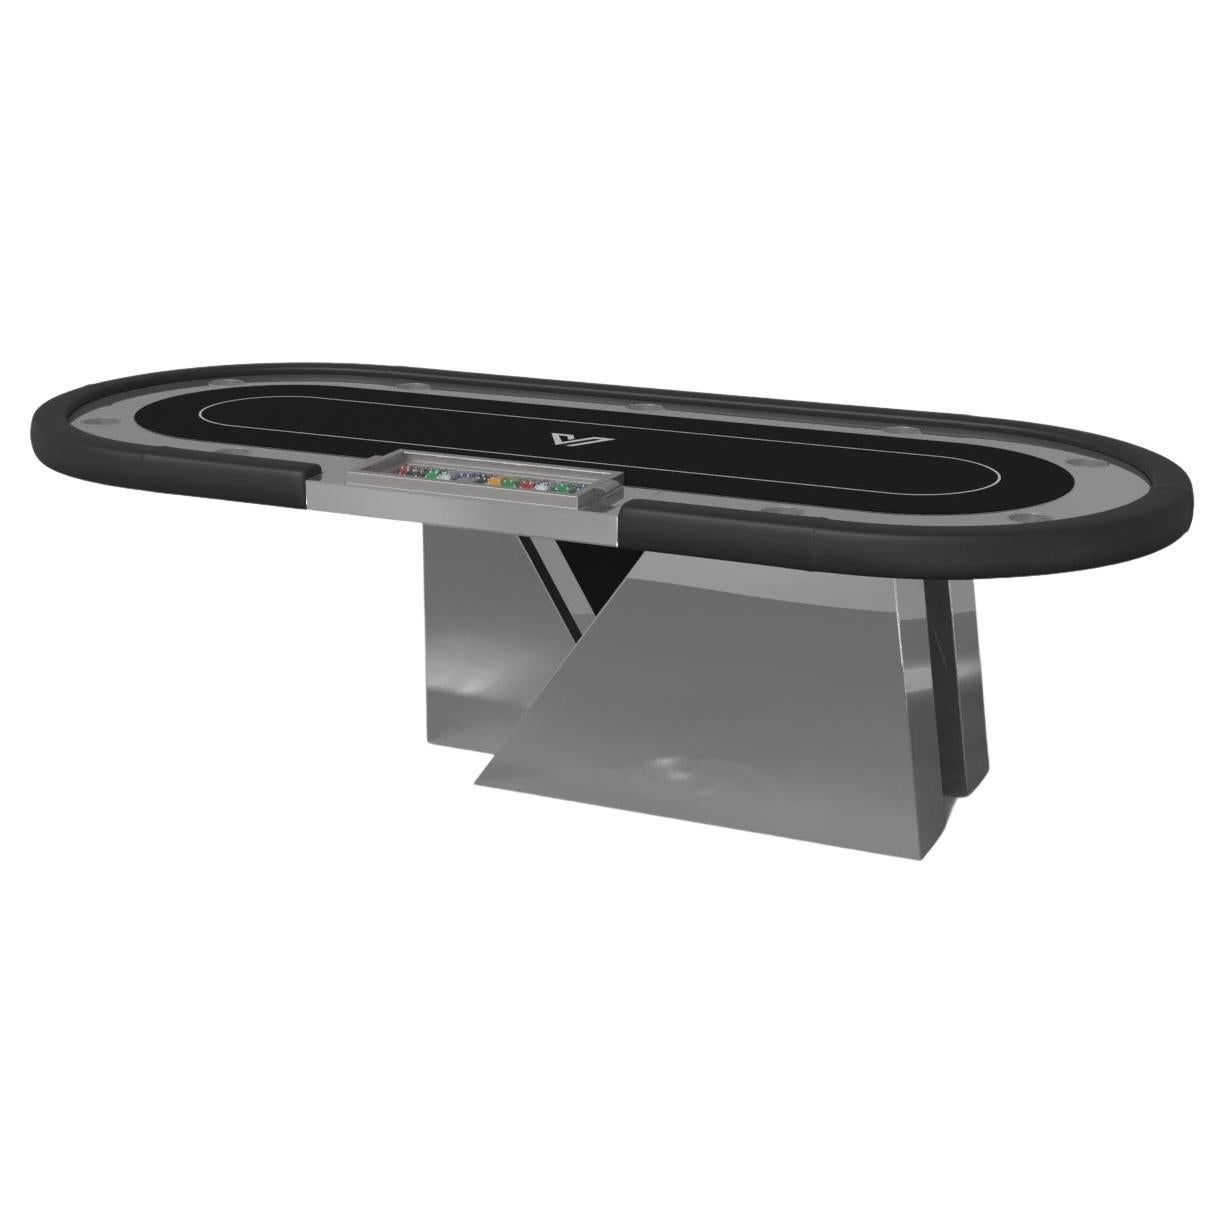 Elevate Customs Stilt Poker Tables / Stainless Steel Sheet Metal in 8'8" - USA For Sale